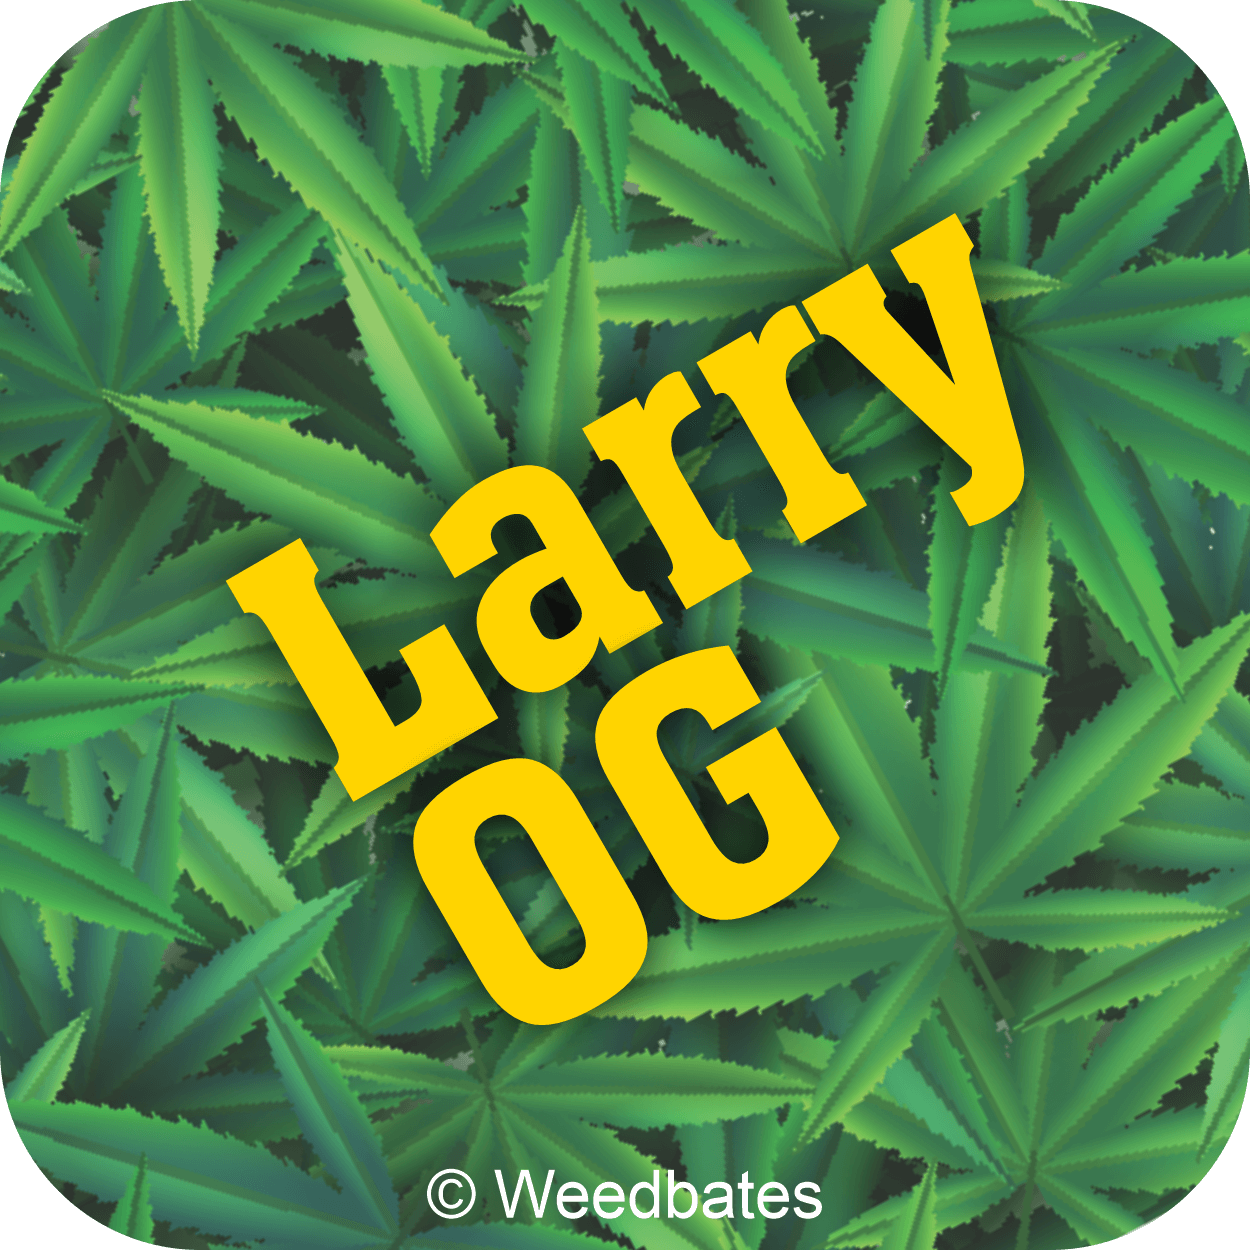 Larry OG marijuana strain